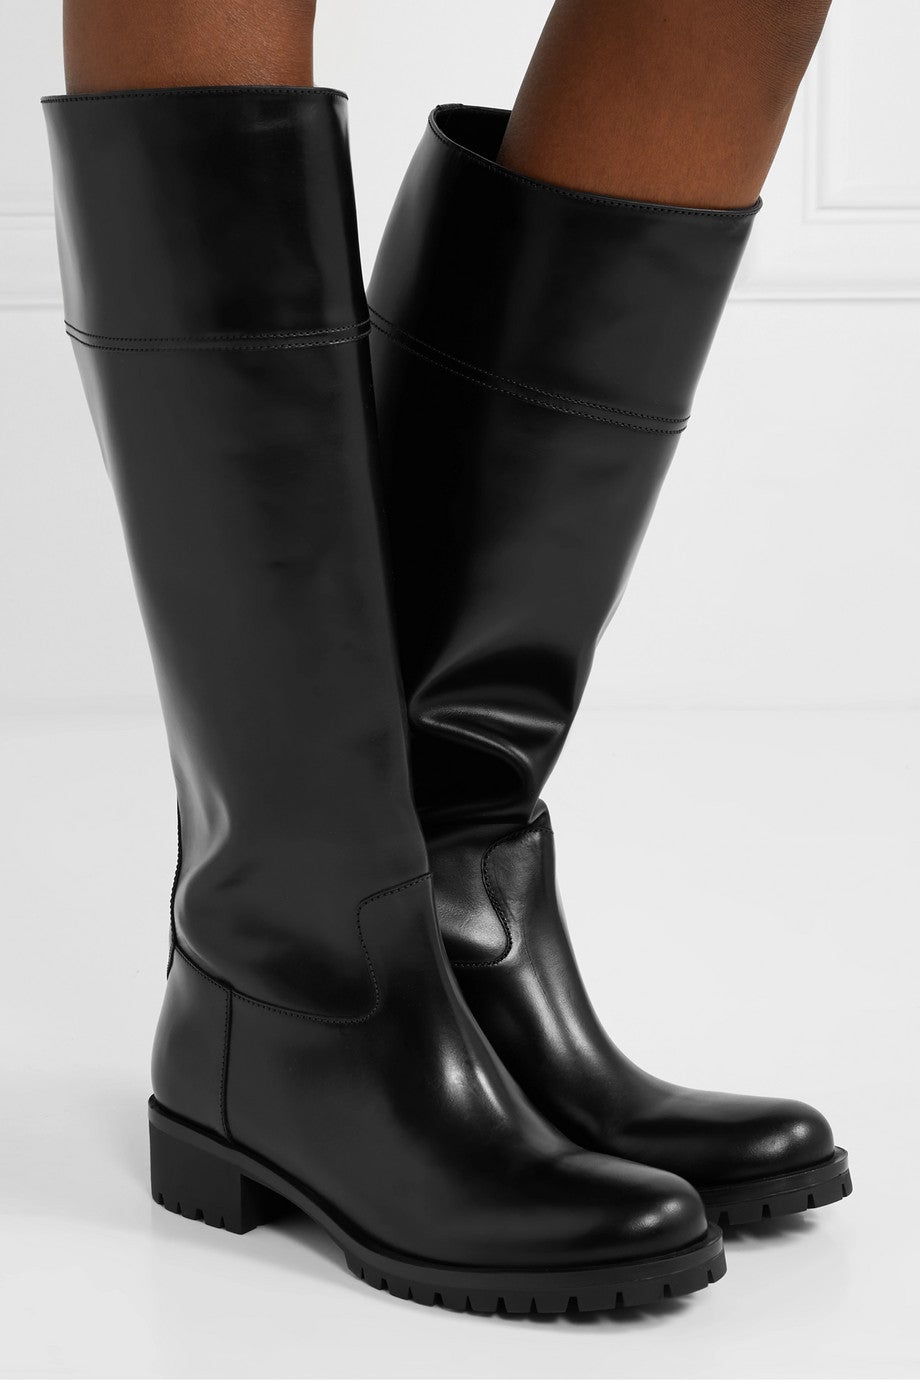 Prada + Leather Knee Boots